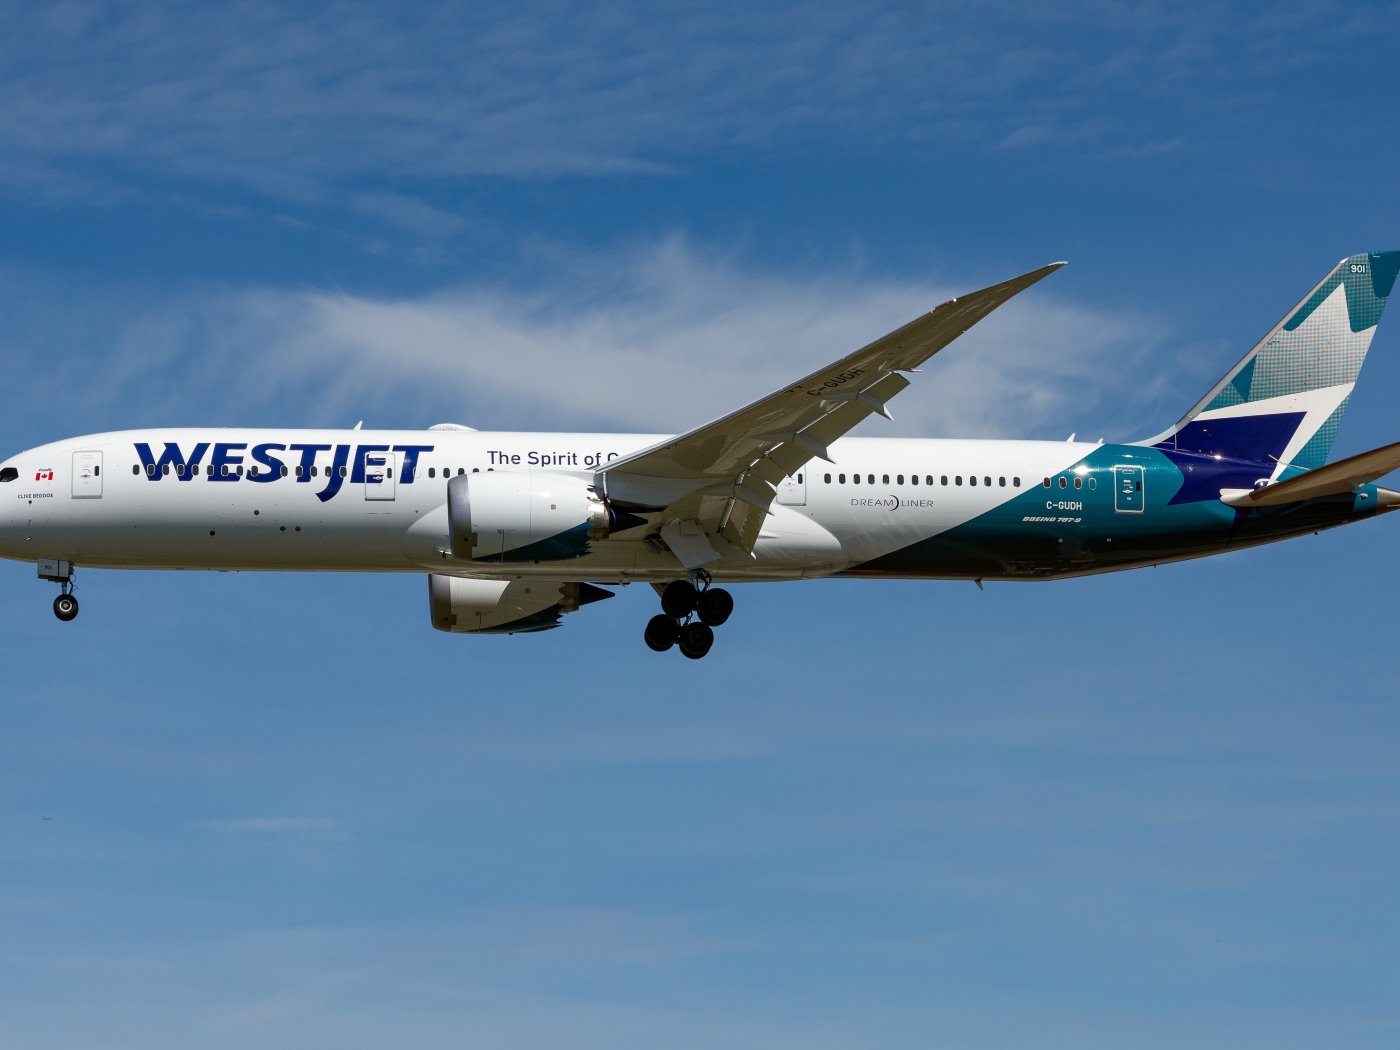 WestJet Boeing 787-9 Passenger Aircraft